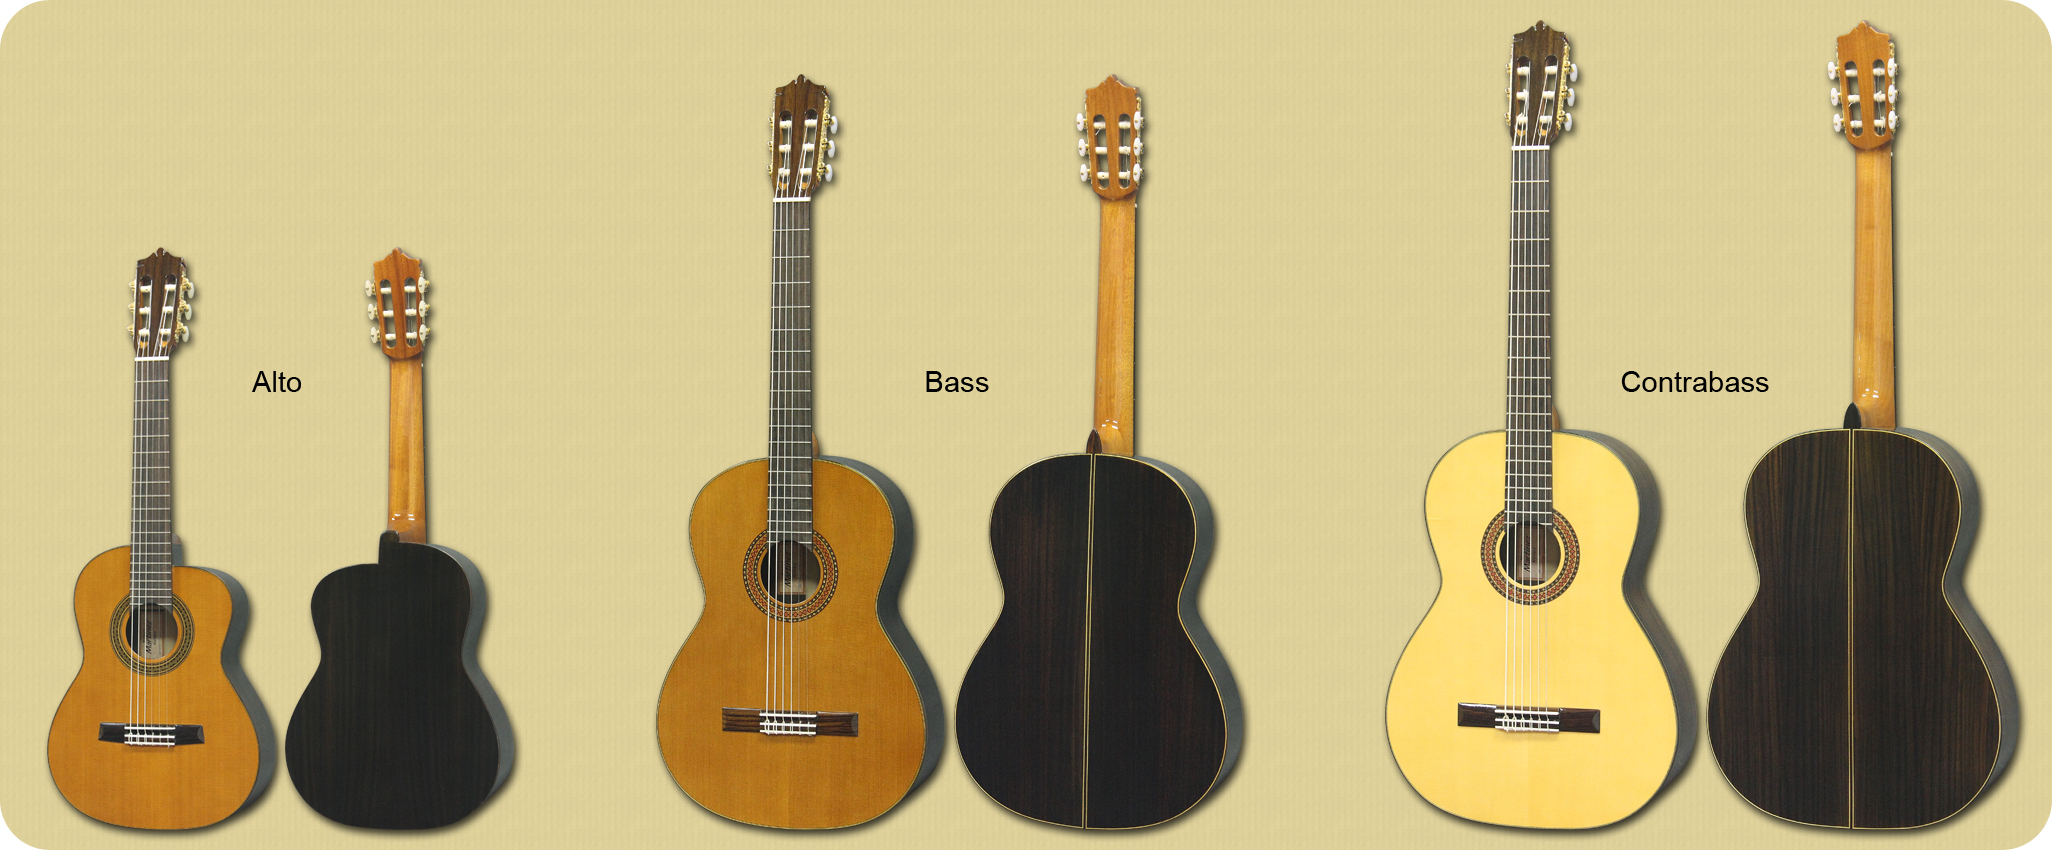 Alto Guitar, Bass Guitar, Contrabass Guitar